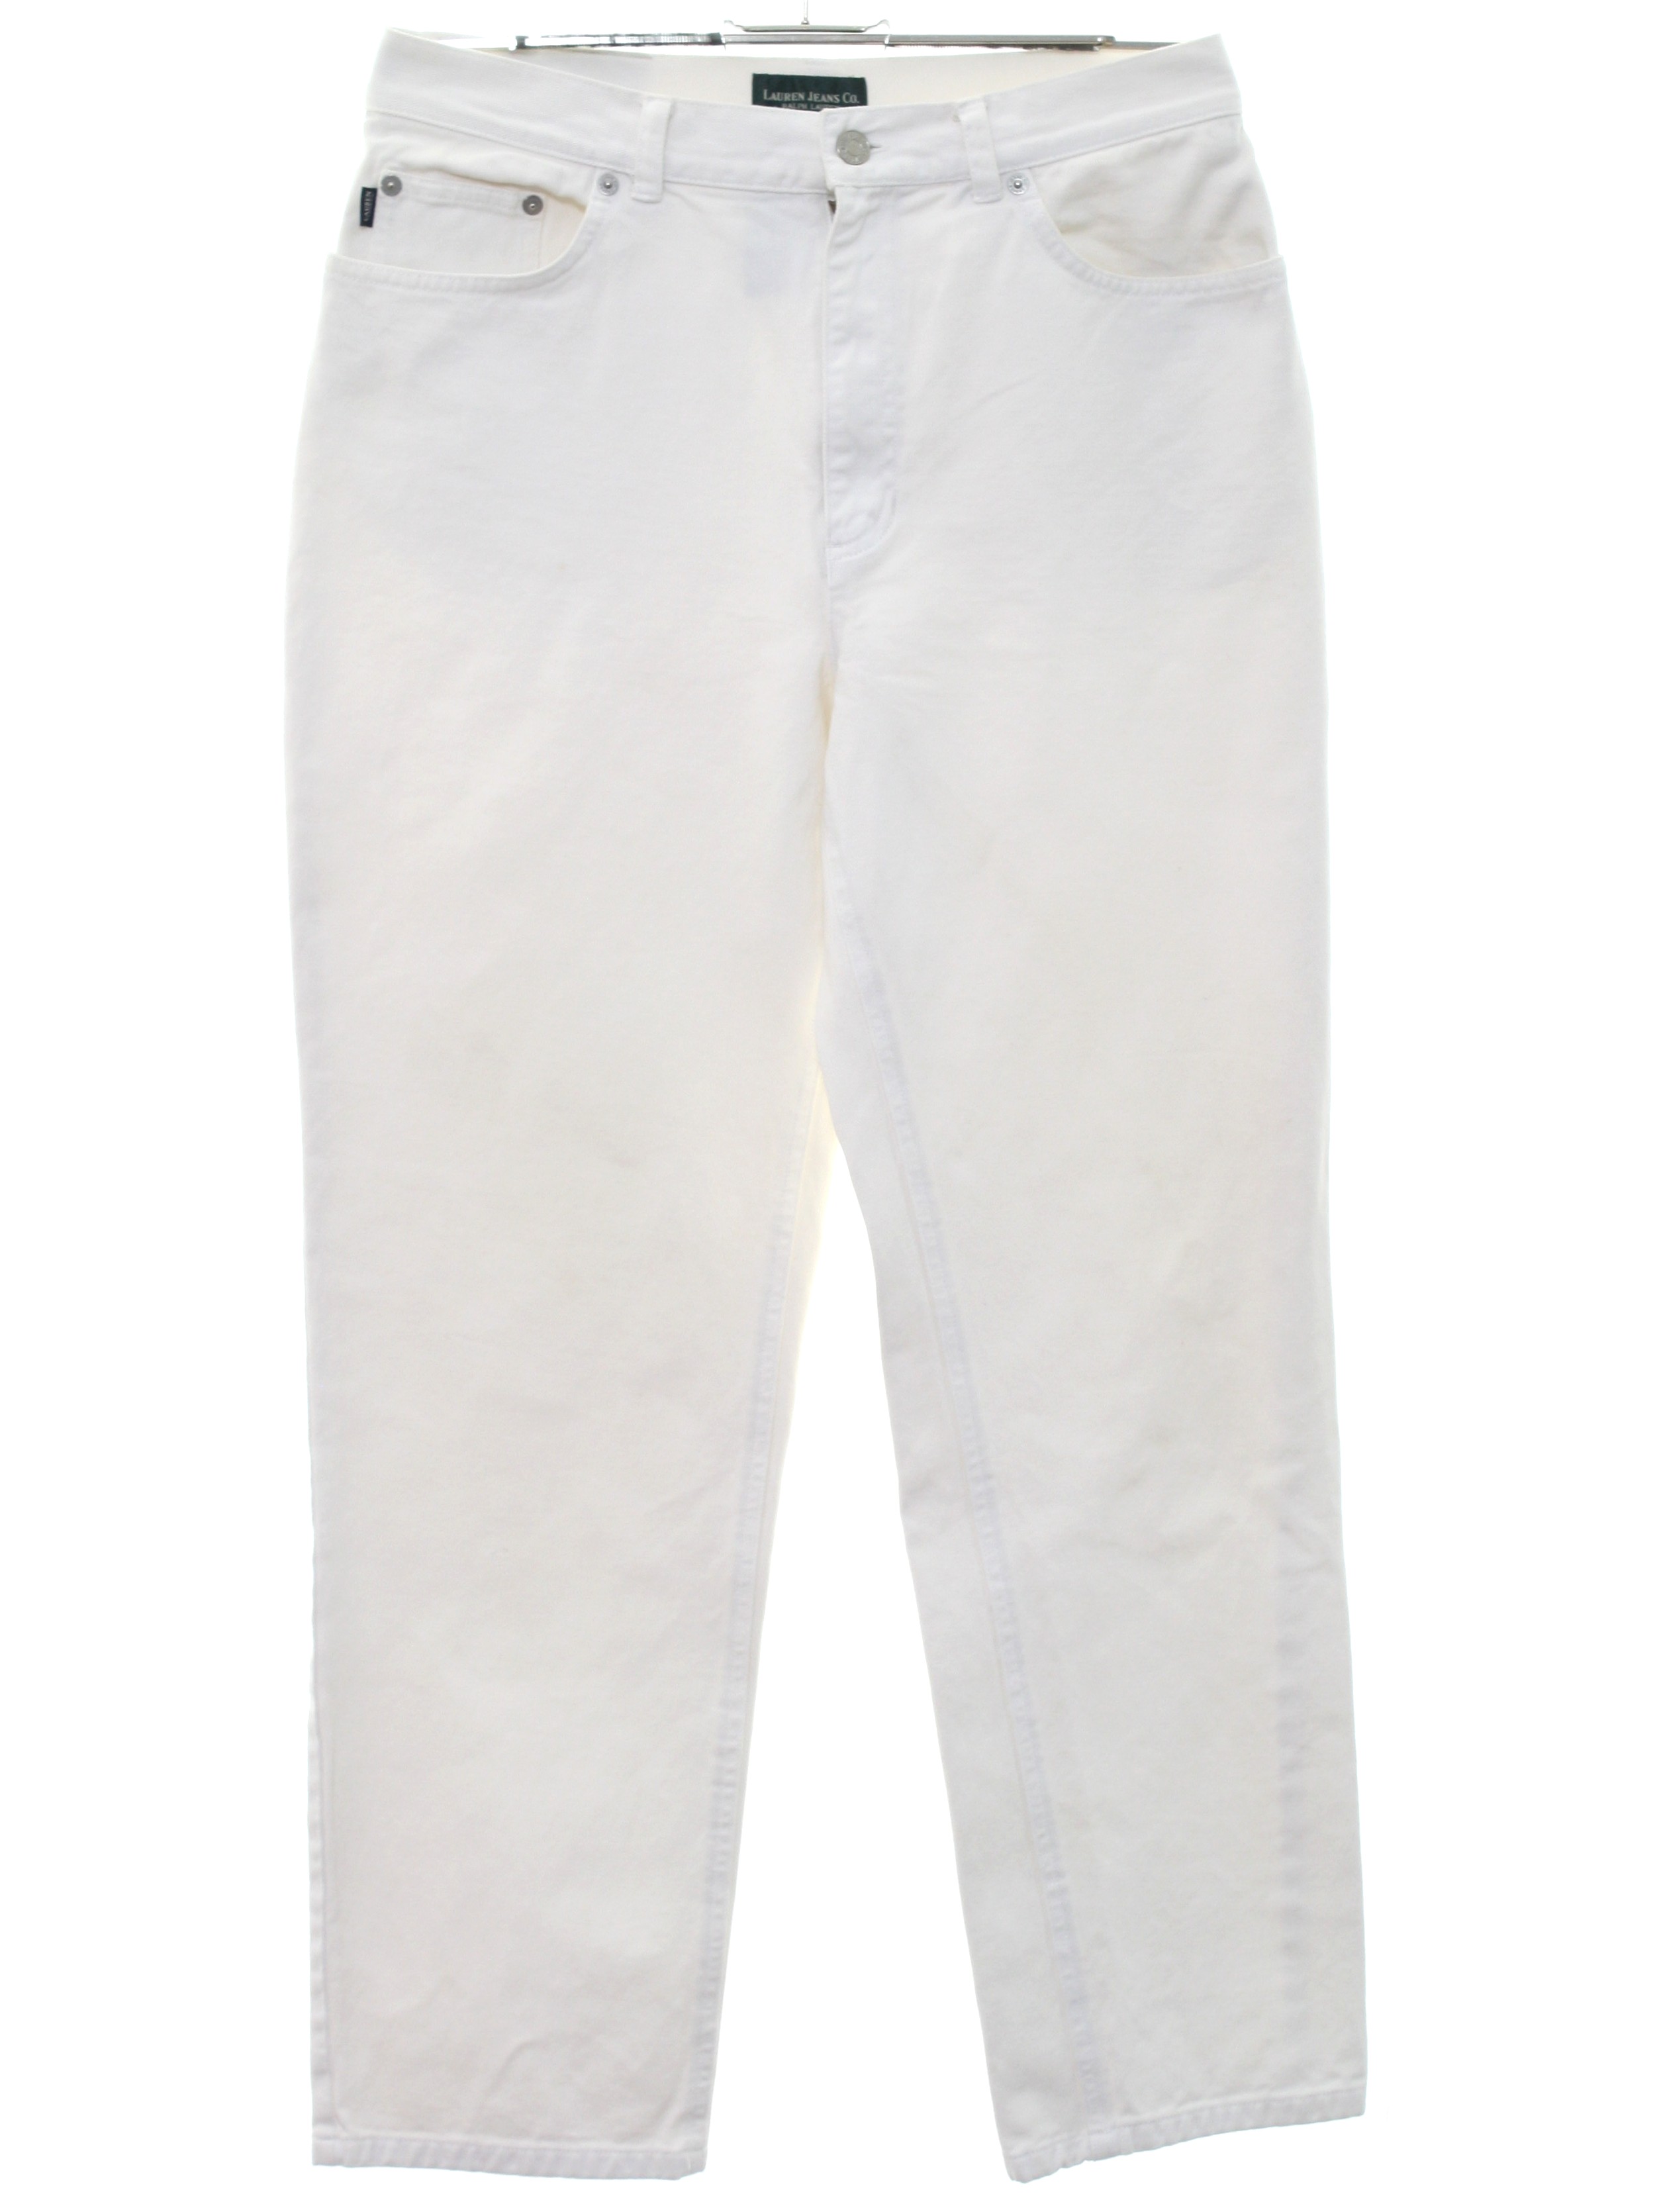 Retro Eighties Pants: 80s -Lauren Jeans Co.- Womens white cotton denim ...